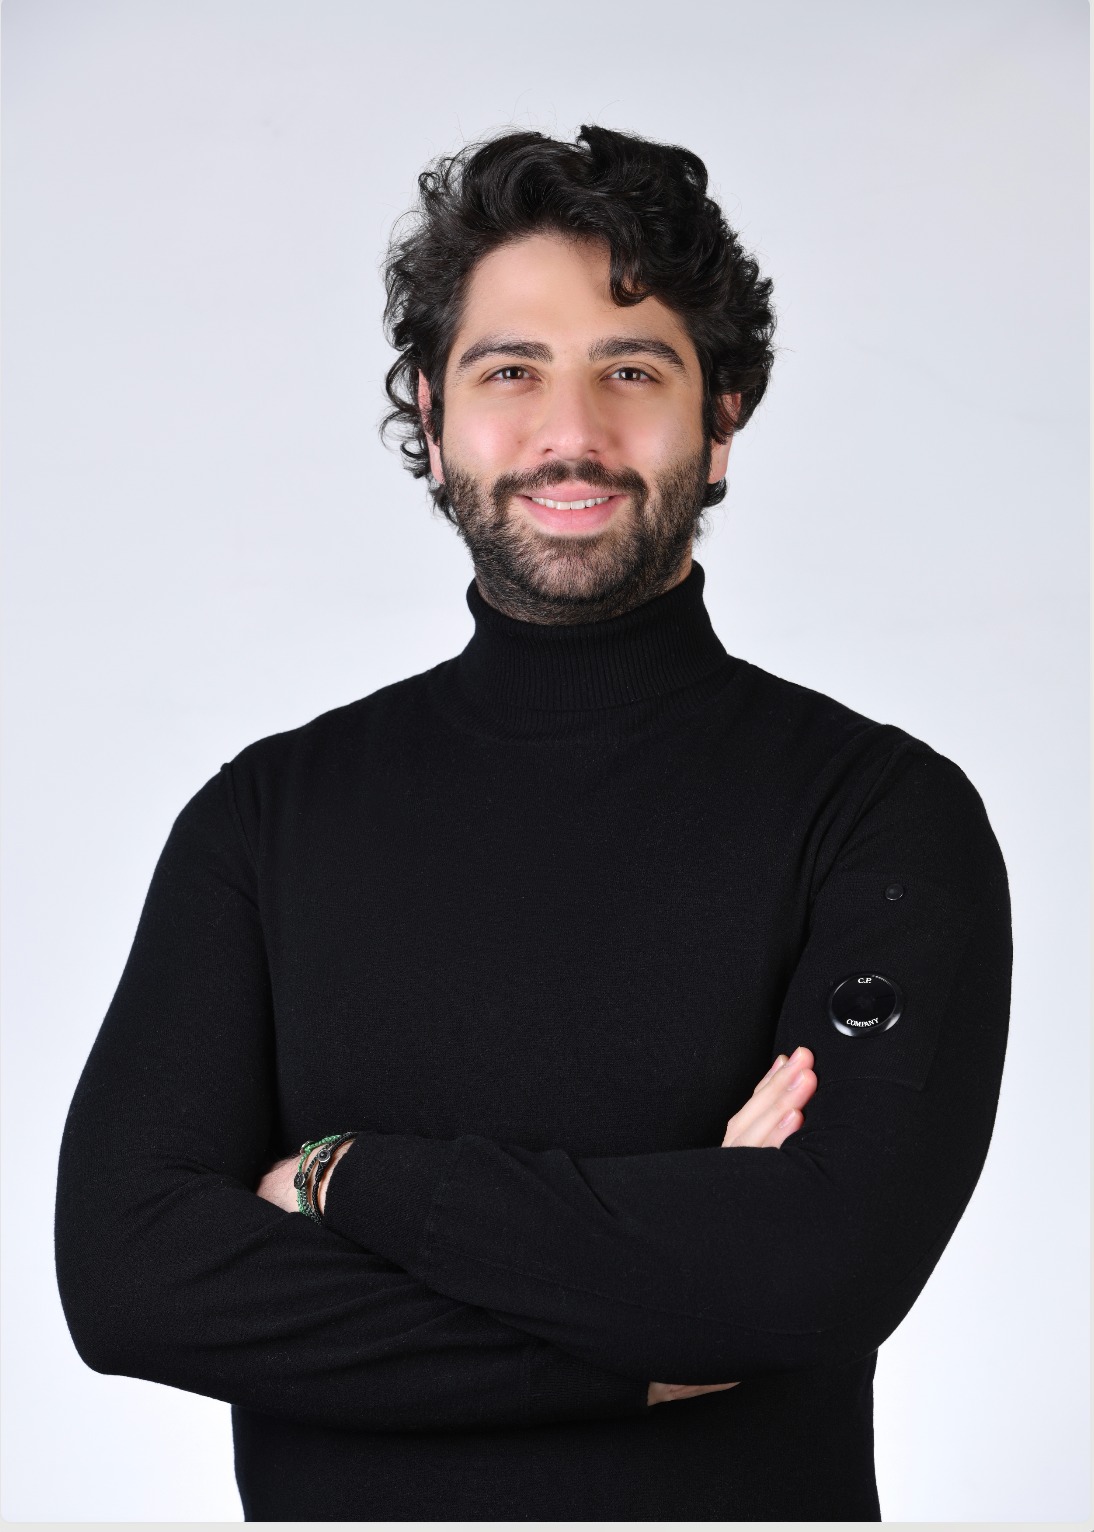 Mehmet Uygun, Co-Founder and CEO